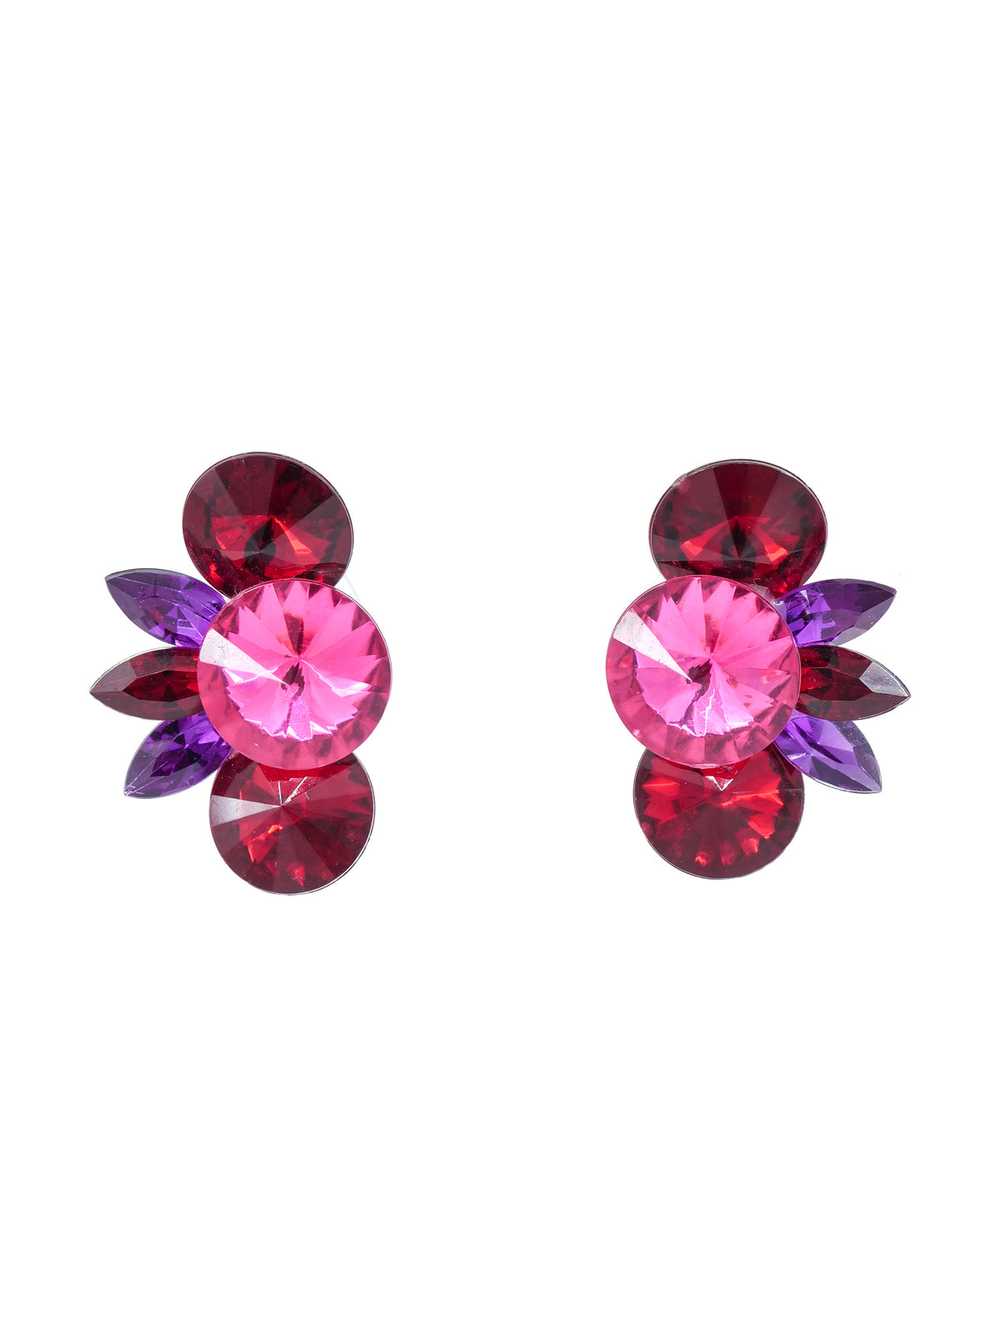 Pink Jeweled Earrings - image 1